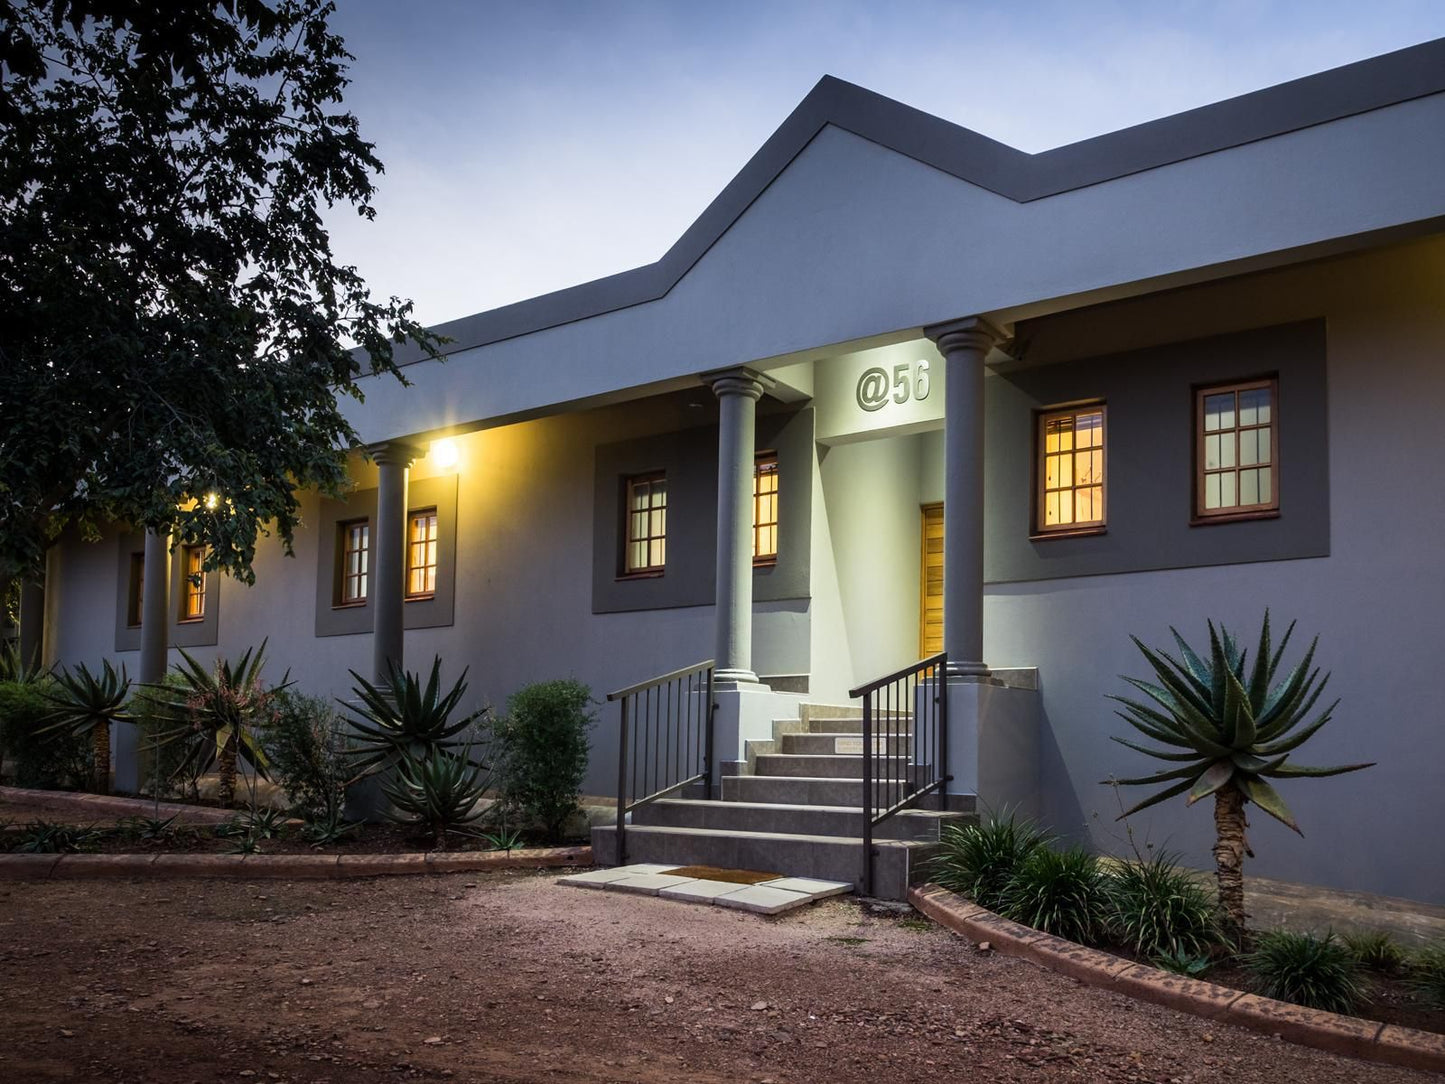 Guesthouse 56 Mooiplaats Pretoria Tshwane Gauteng South Africa House, Building, Architecture